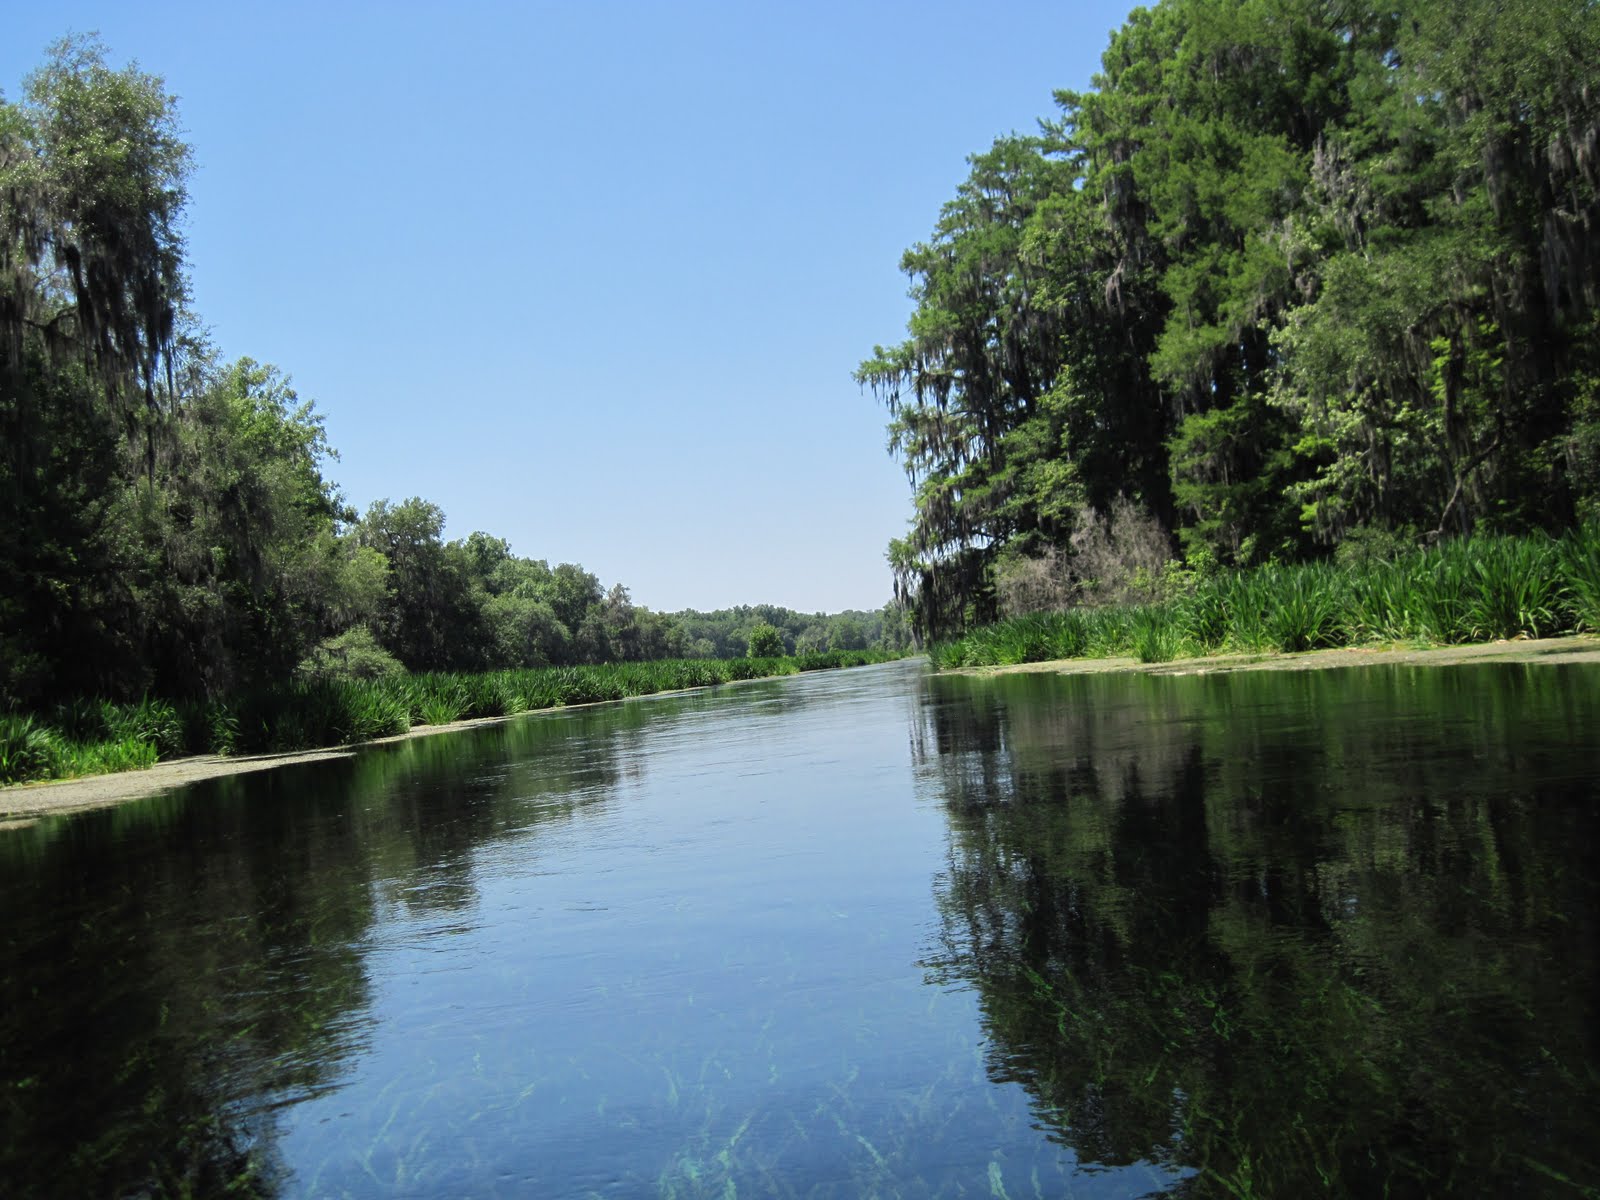 Til the Last Hemlock Dies: Down the Amazing Ichetucknee River